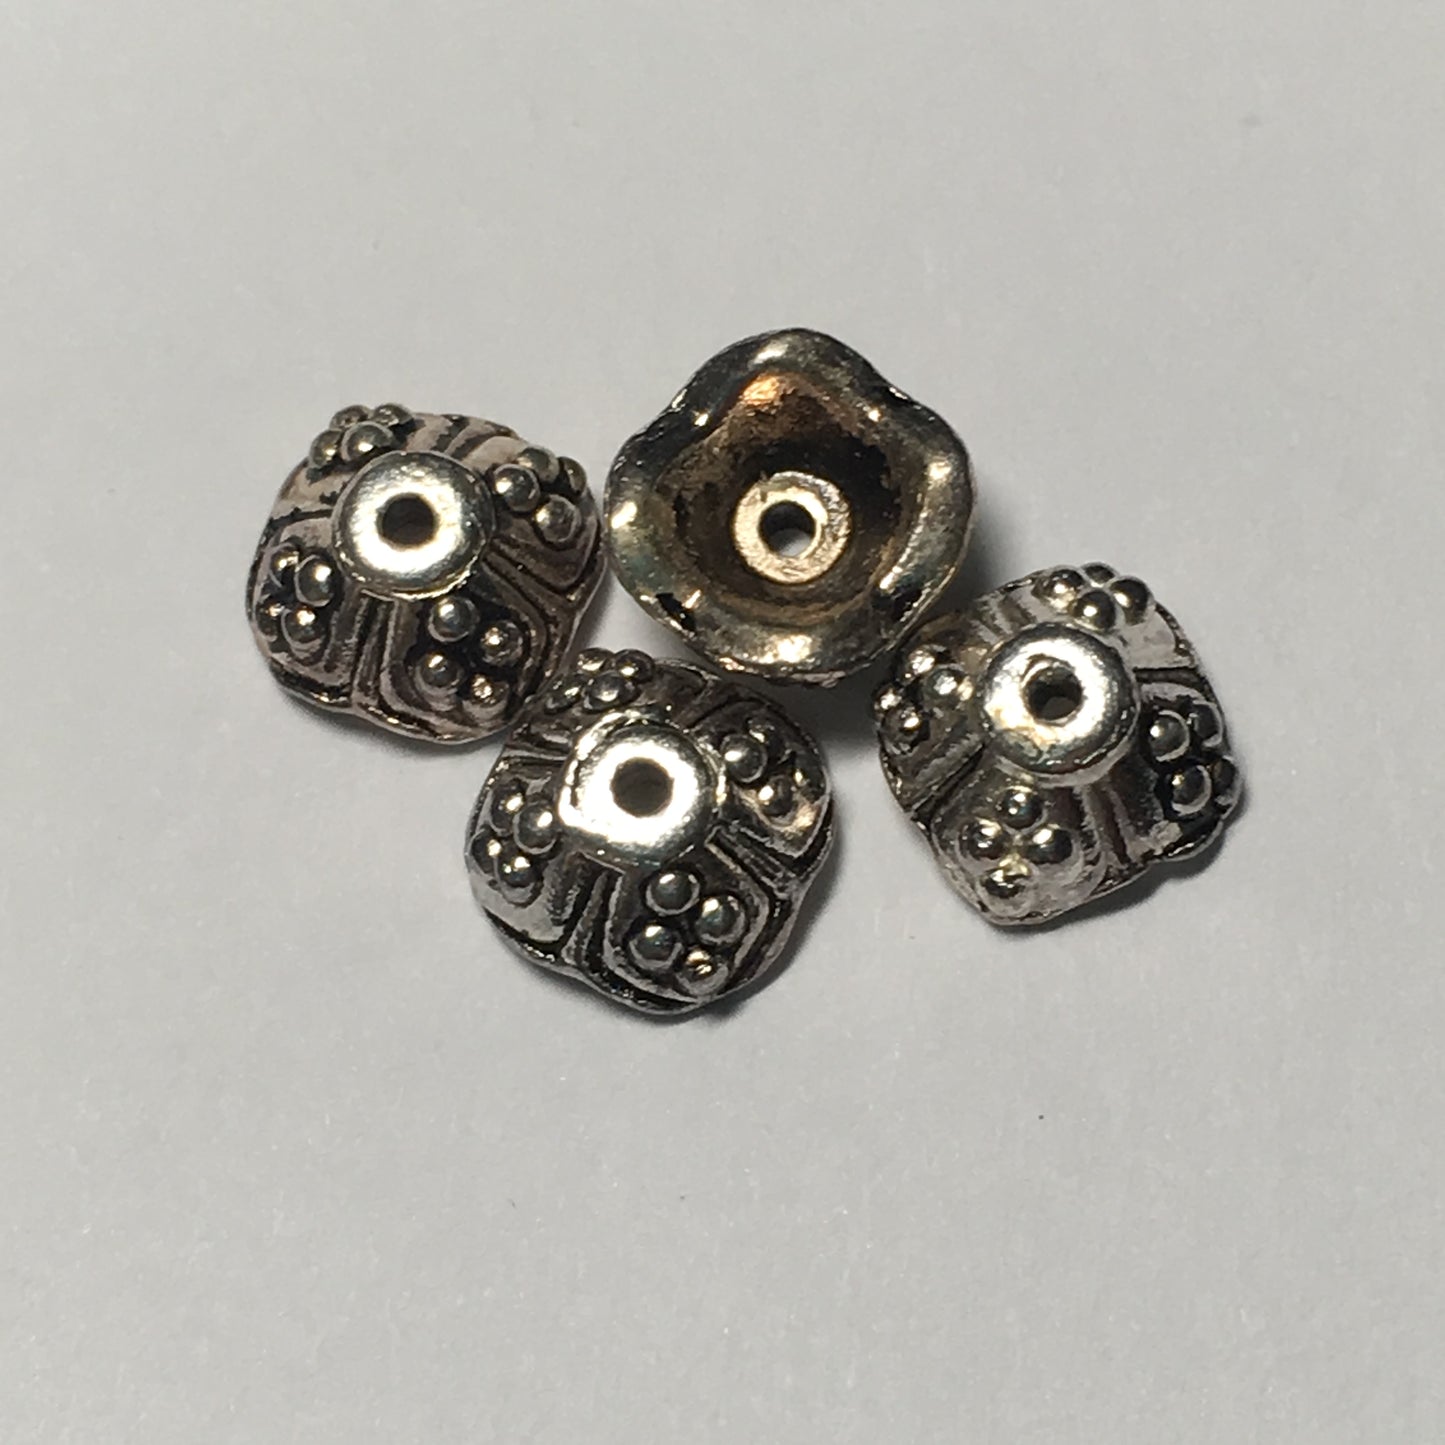 Antique Silver Square Dot Diamonds Bead Caps, 7 mm  - 4 Caps